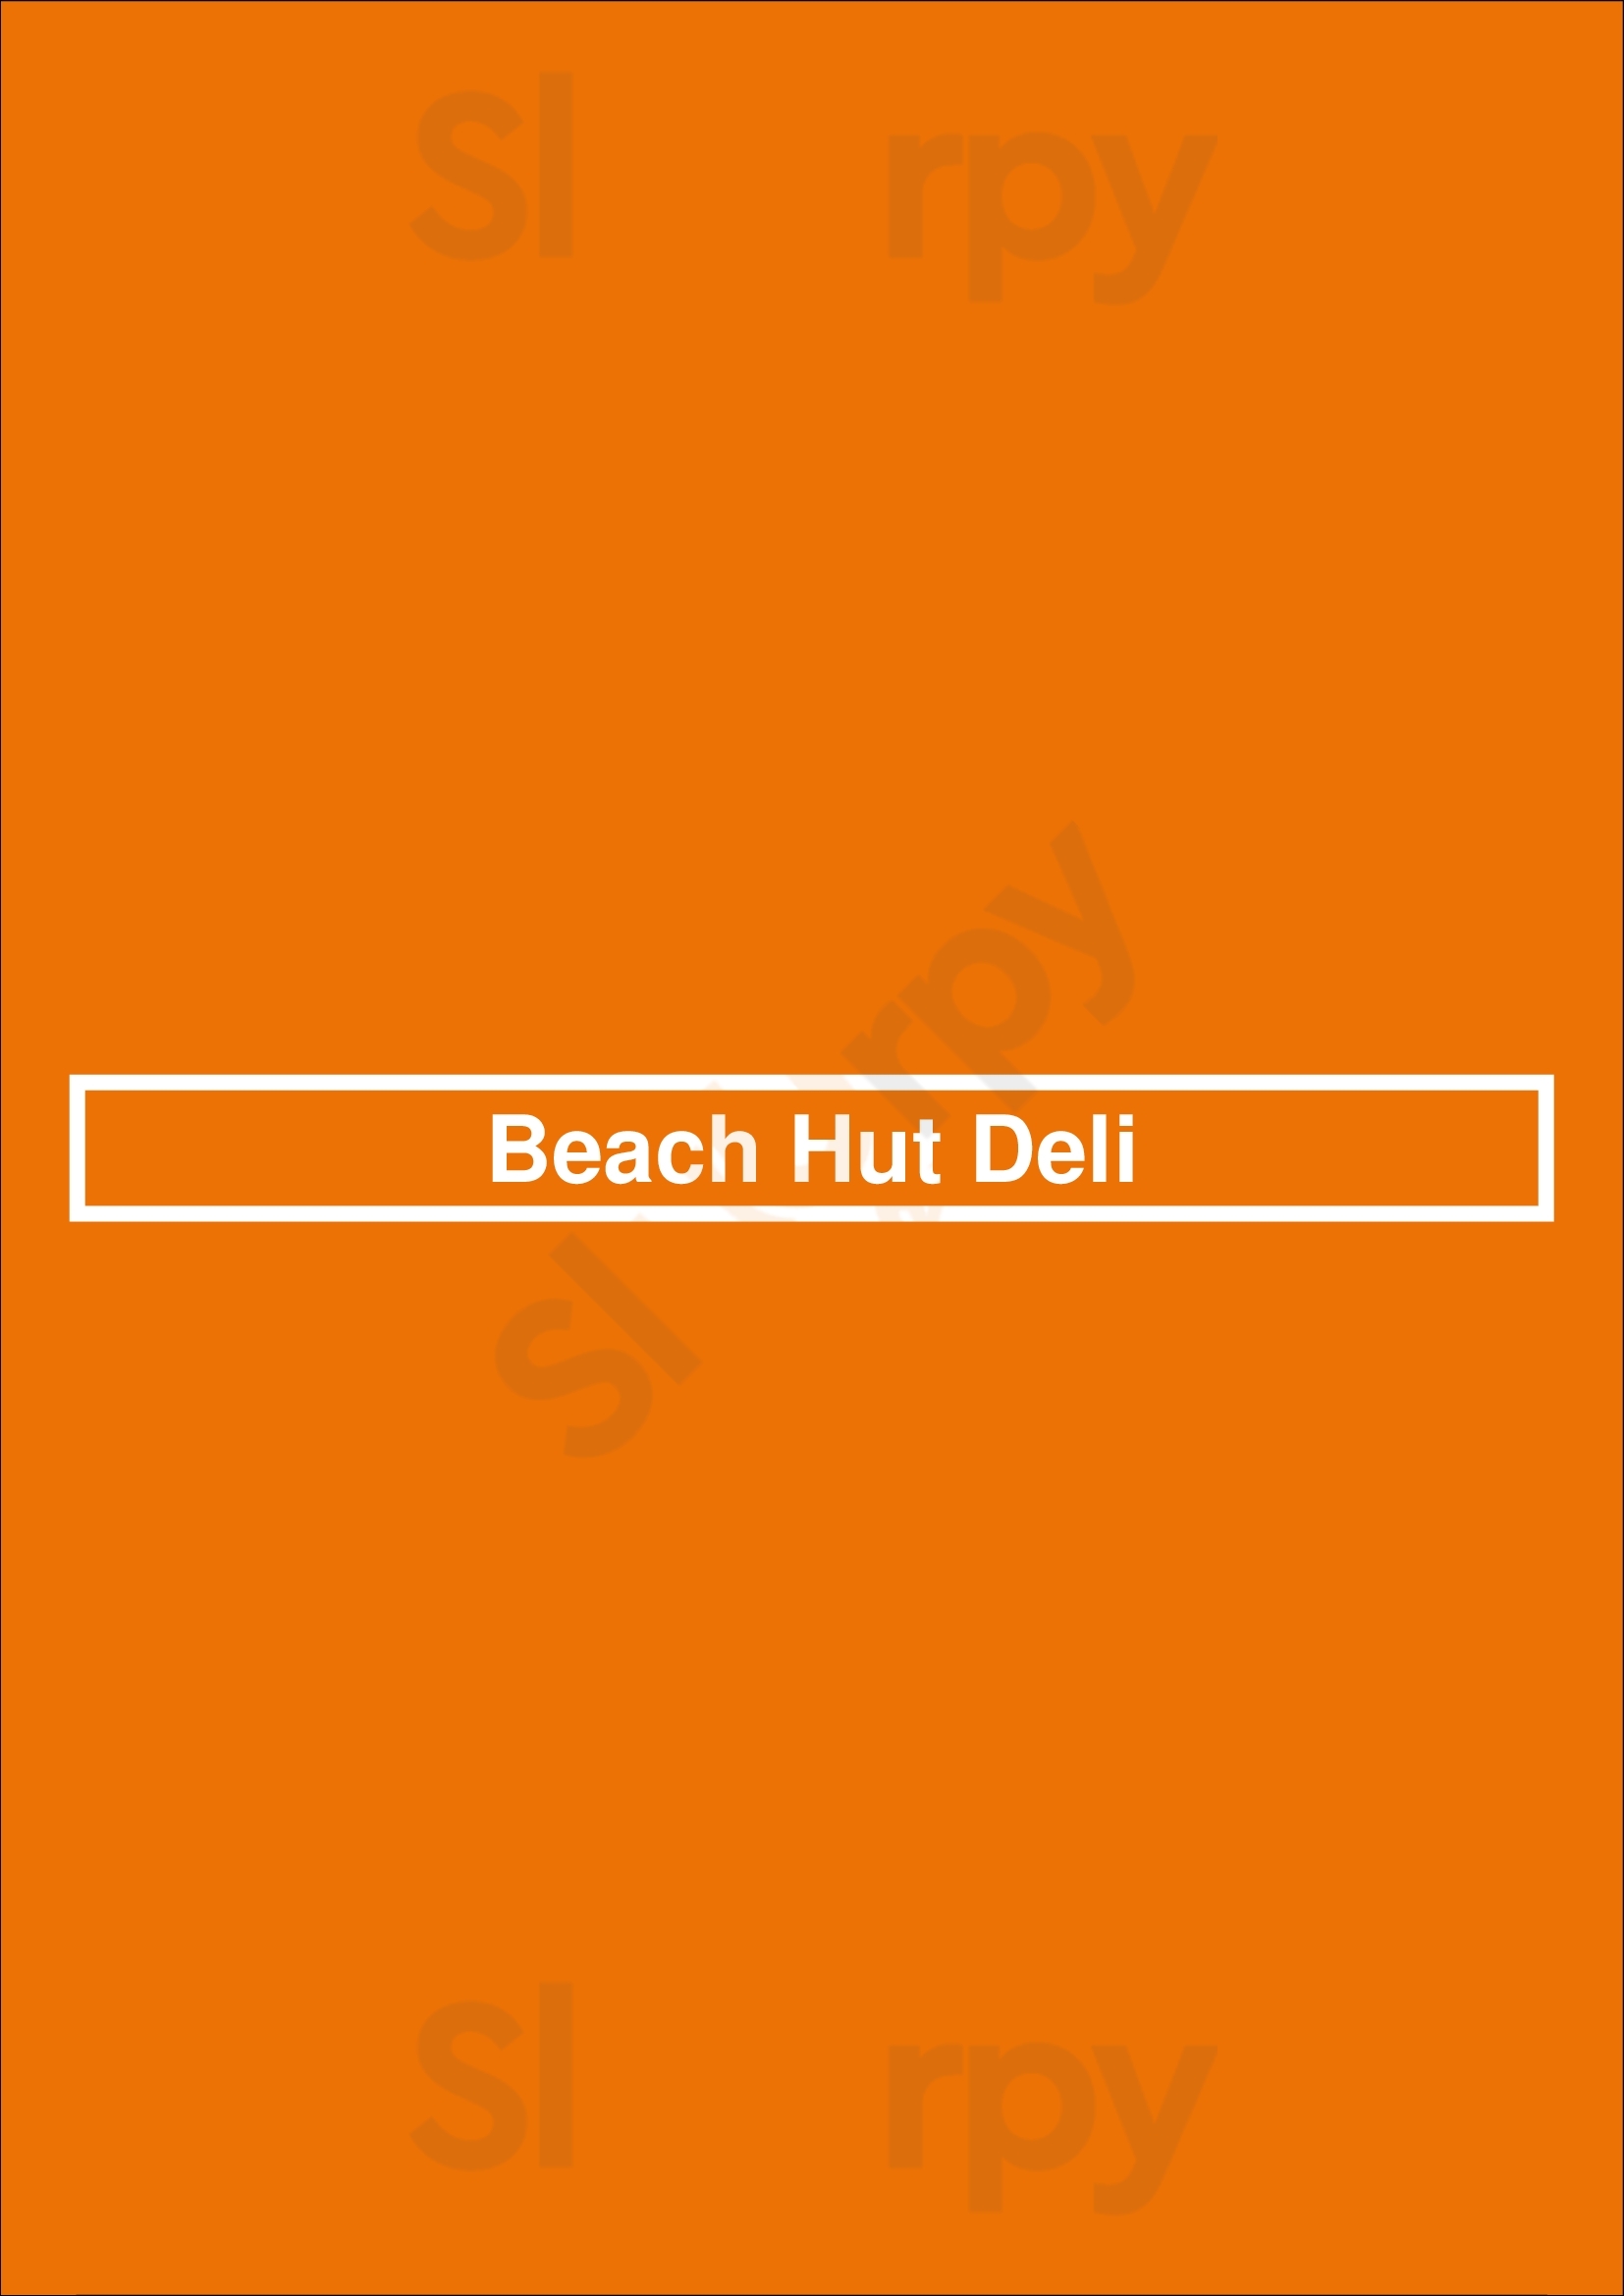 Beach Hut Deli San Diego Menu - 1